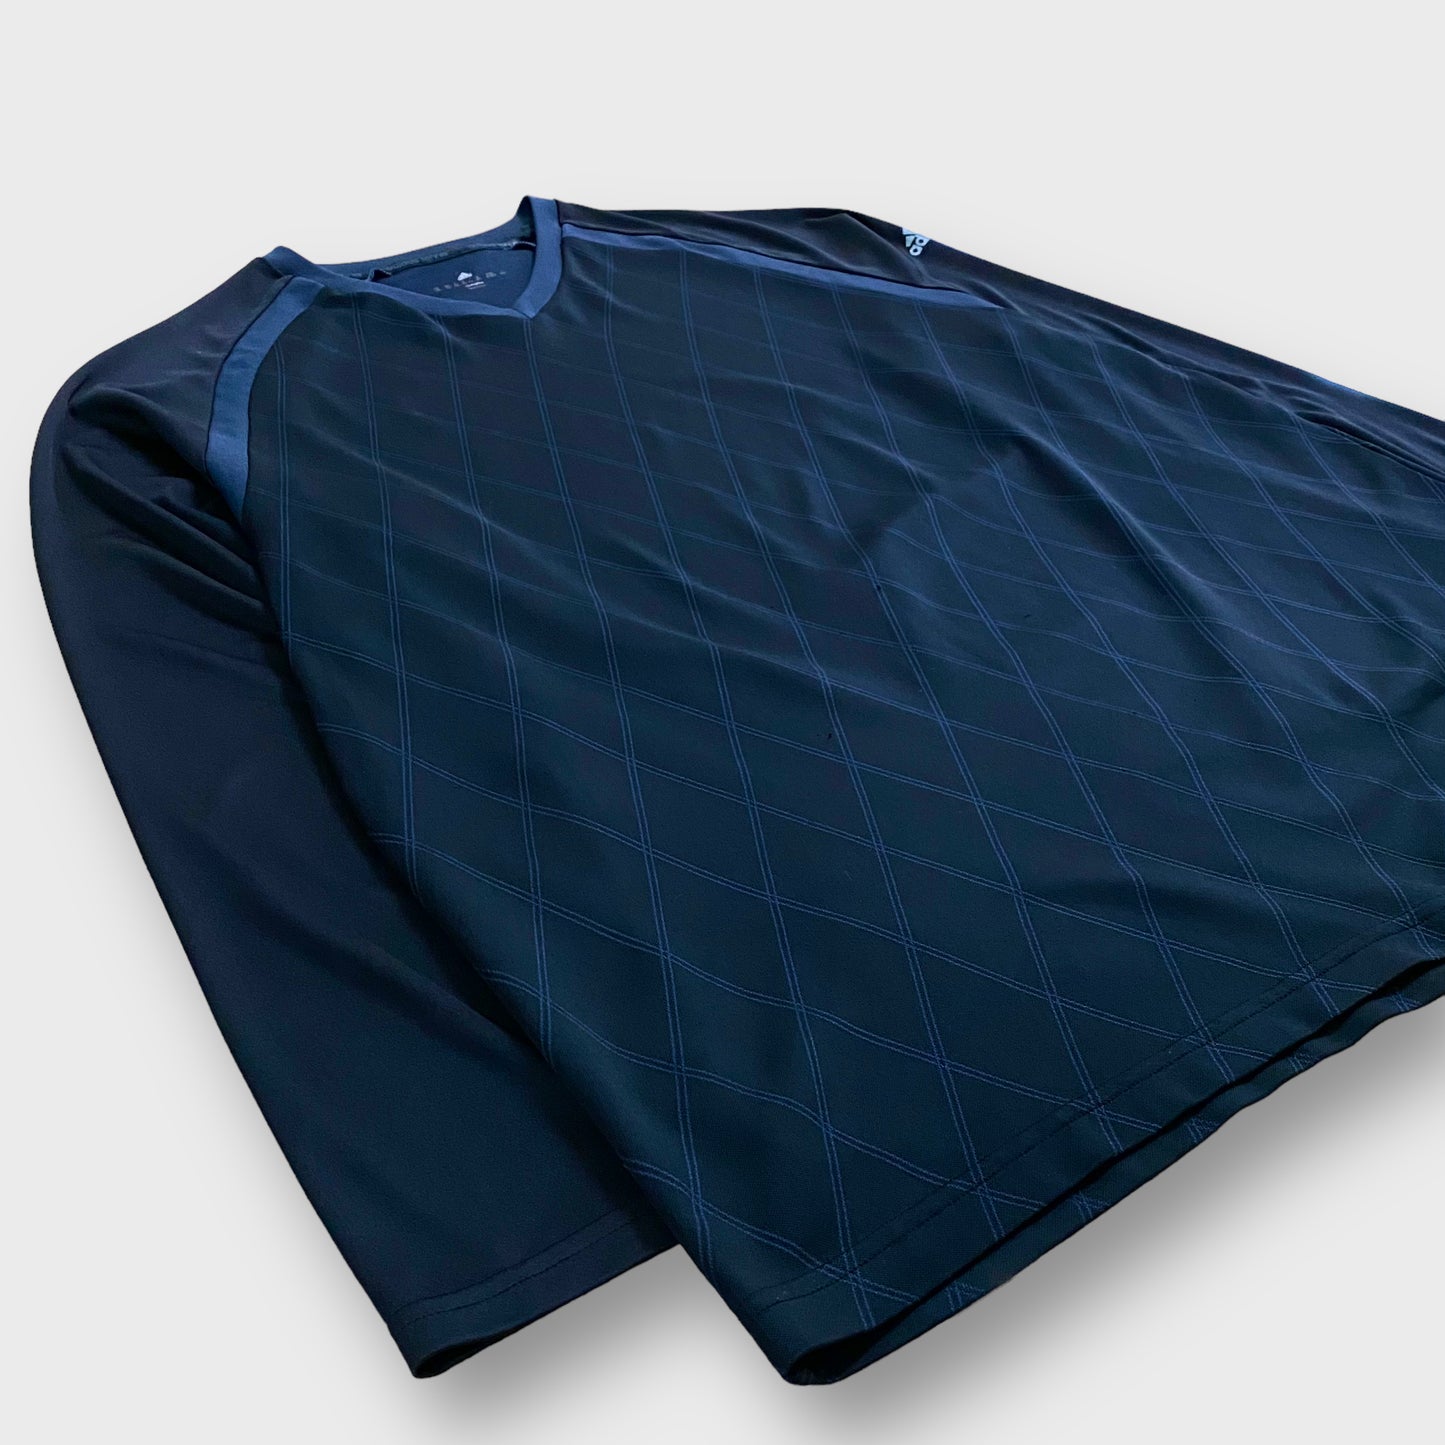 "adidas" Argyle pattern polyester top